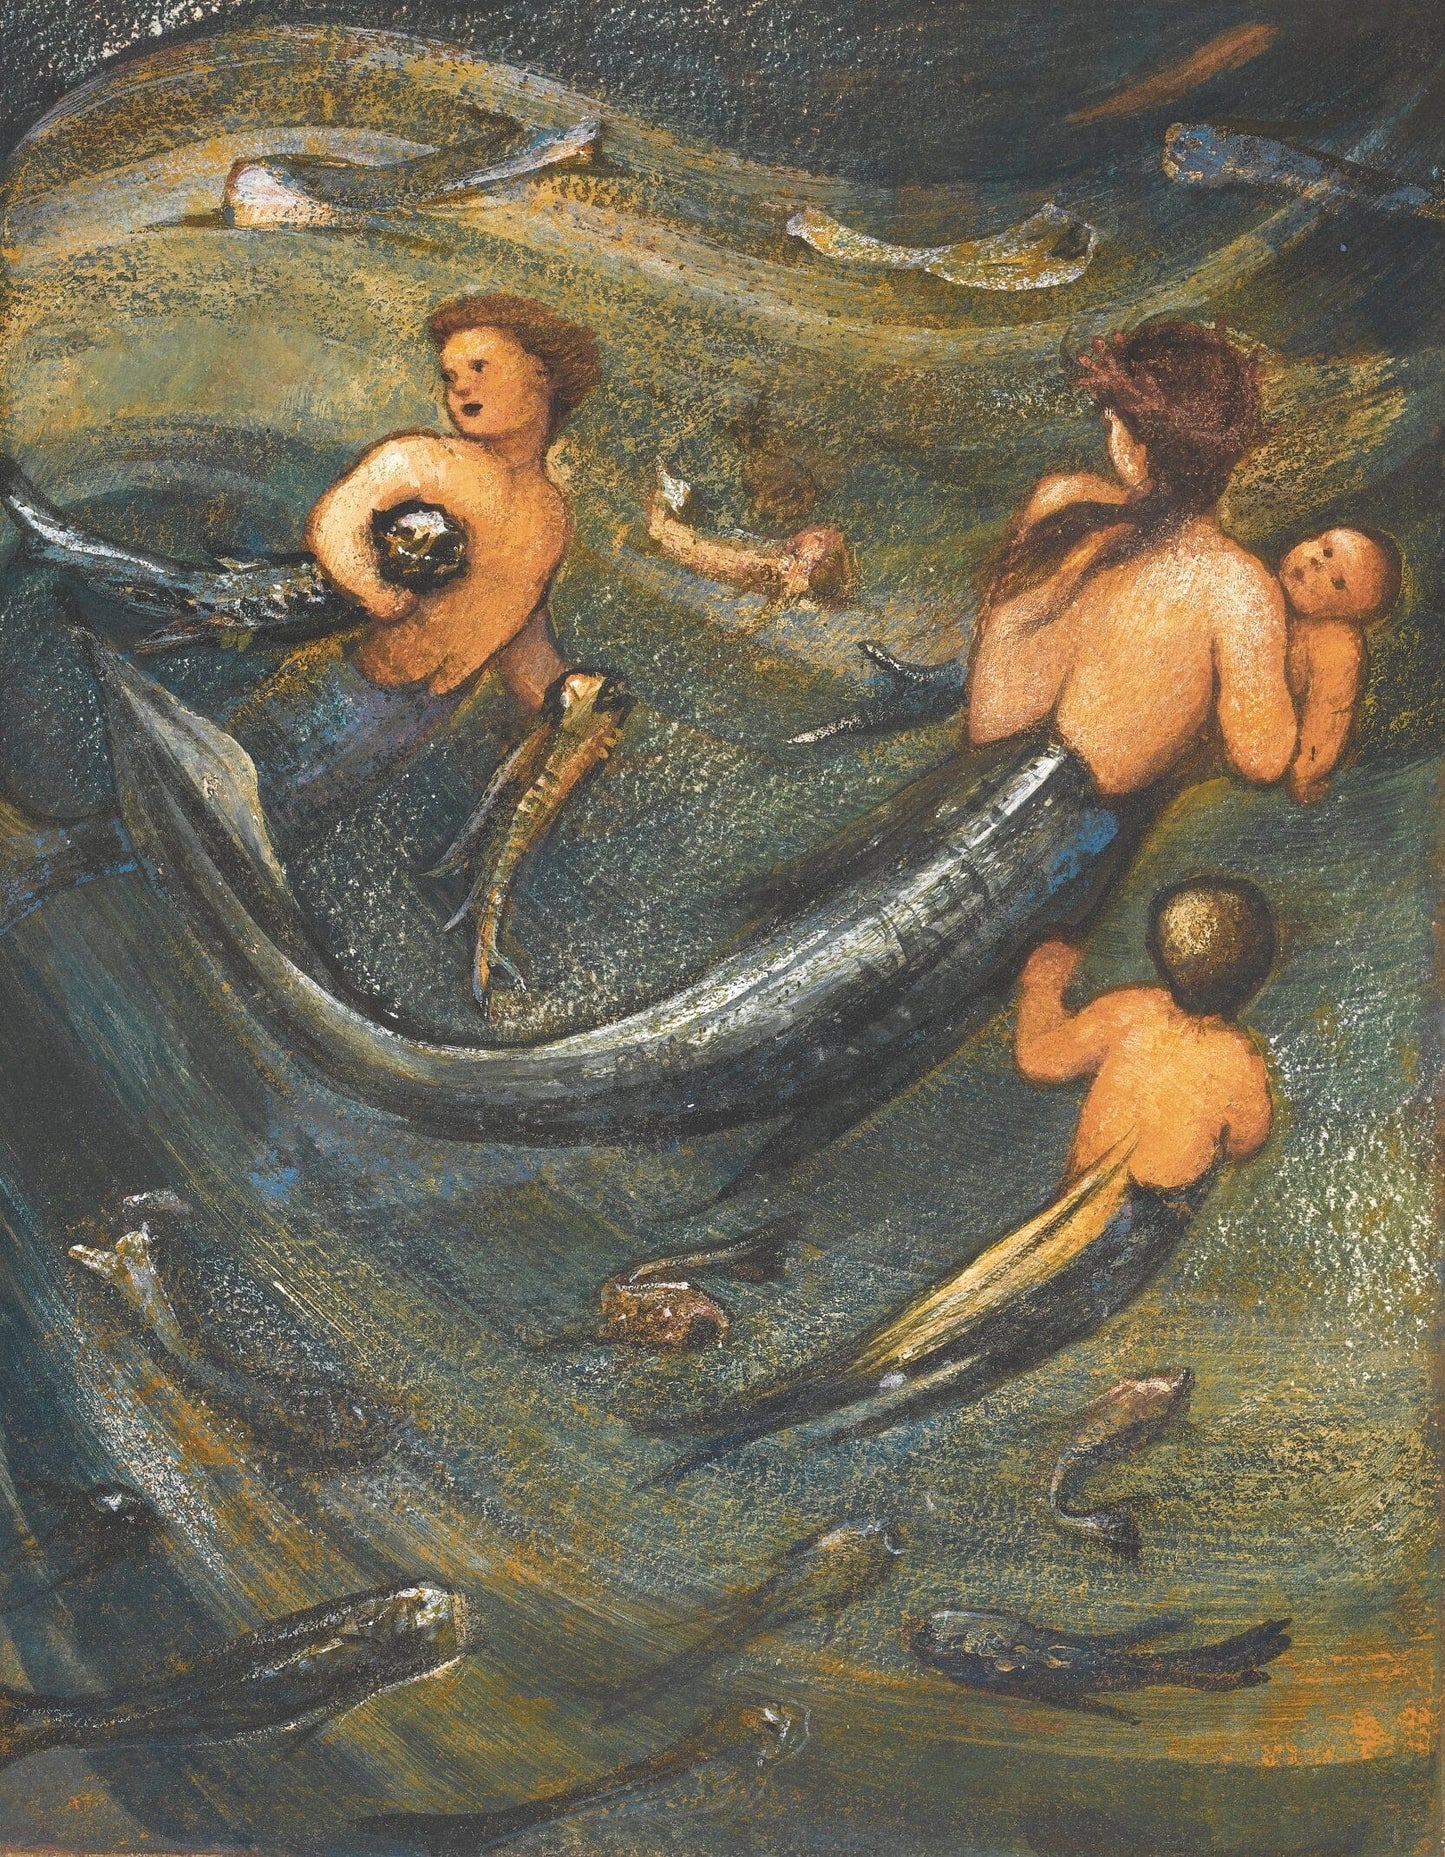 The Mermaid Family (1800s) | Vintage bathroom prints | Sir Edward Coley Burne-Jones Posters, Prints, & Visual Artwork The Trumpet Shop   